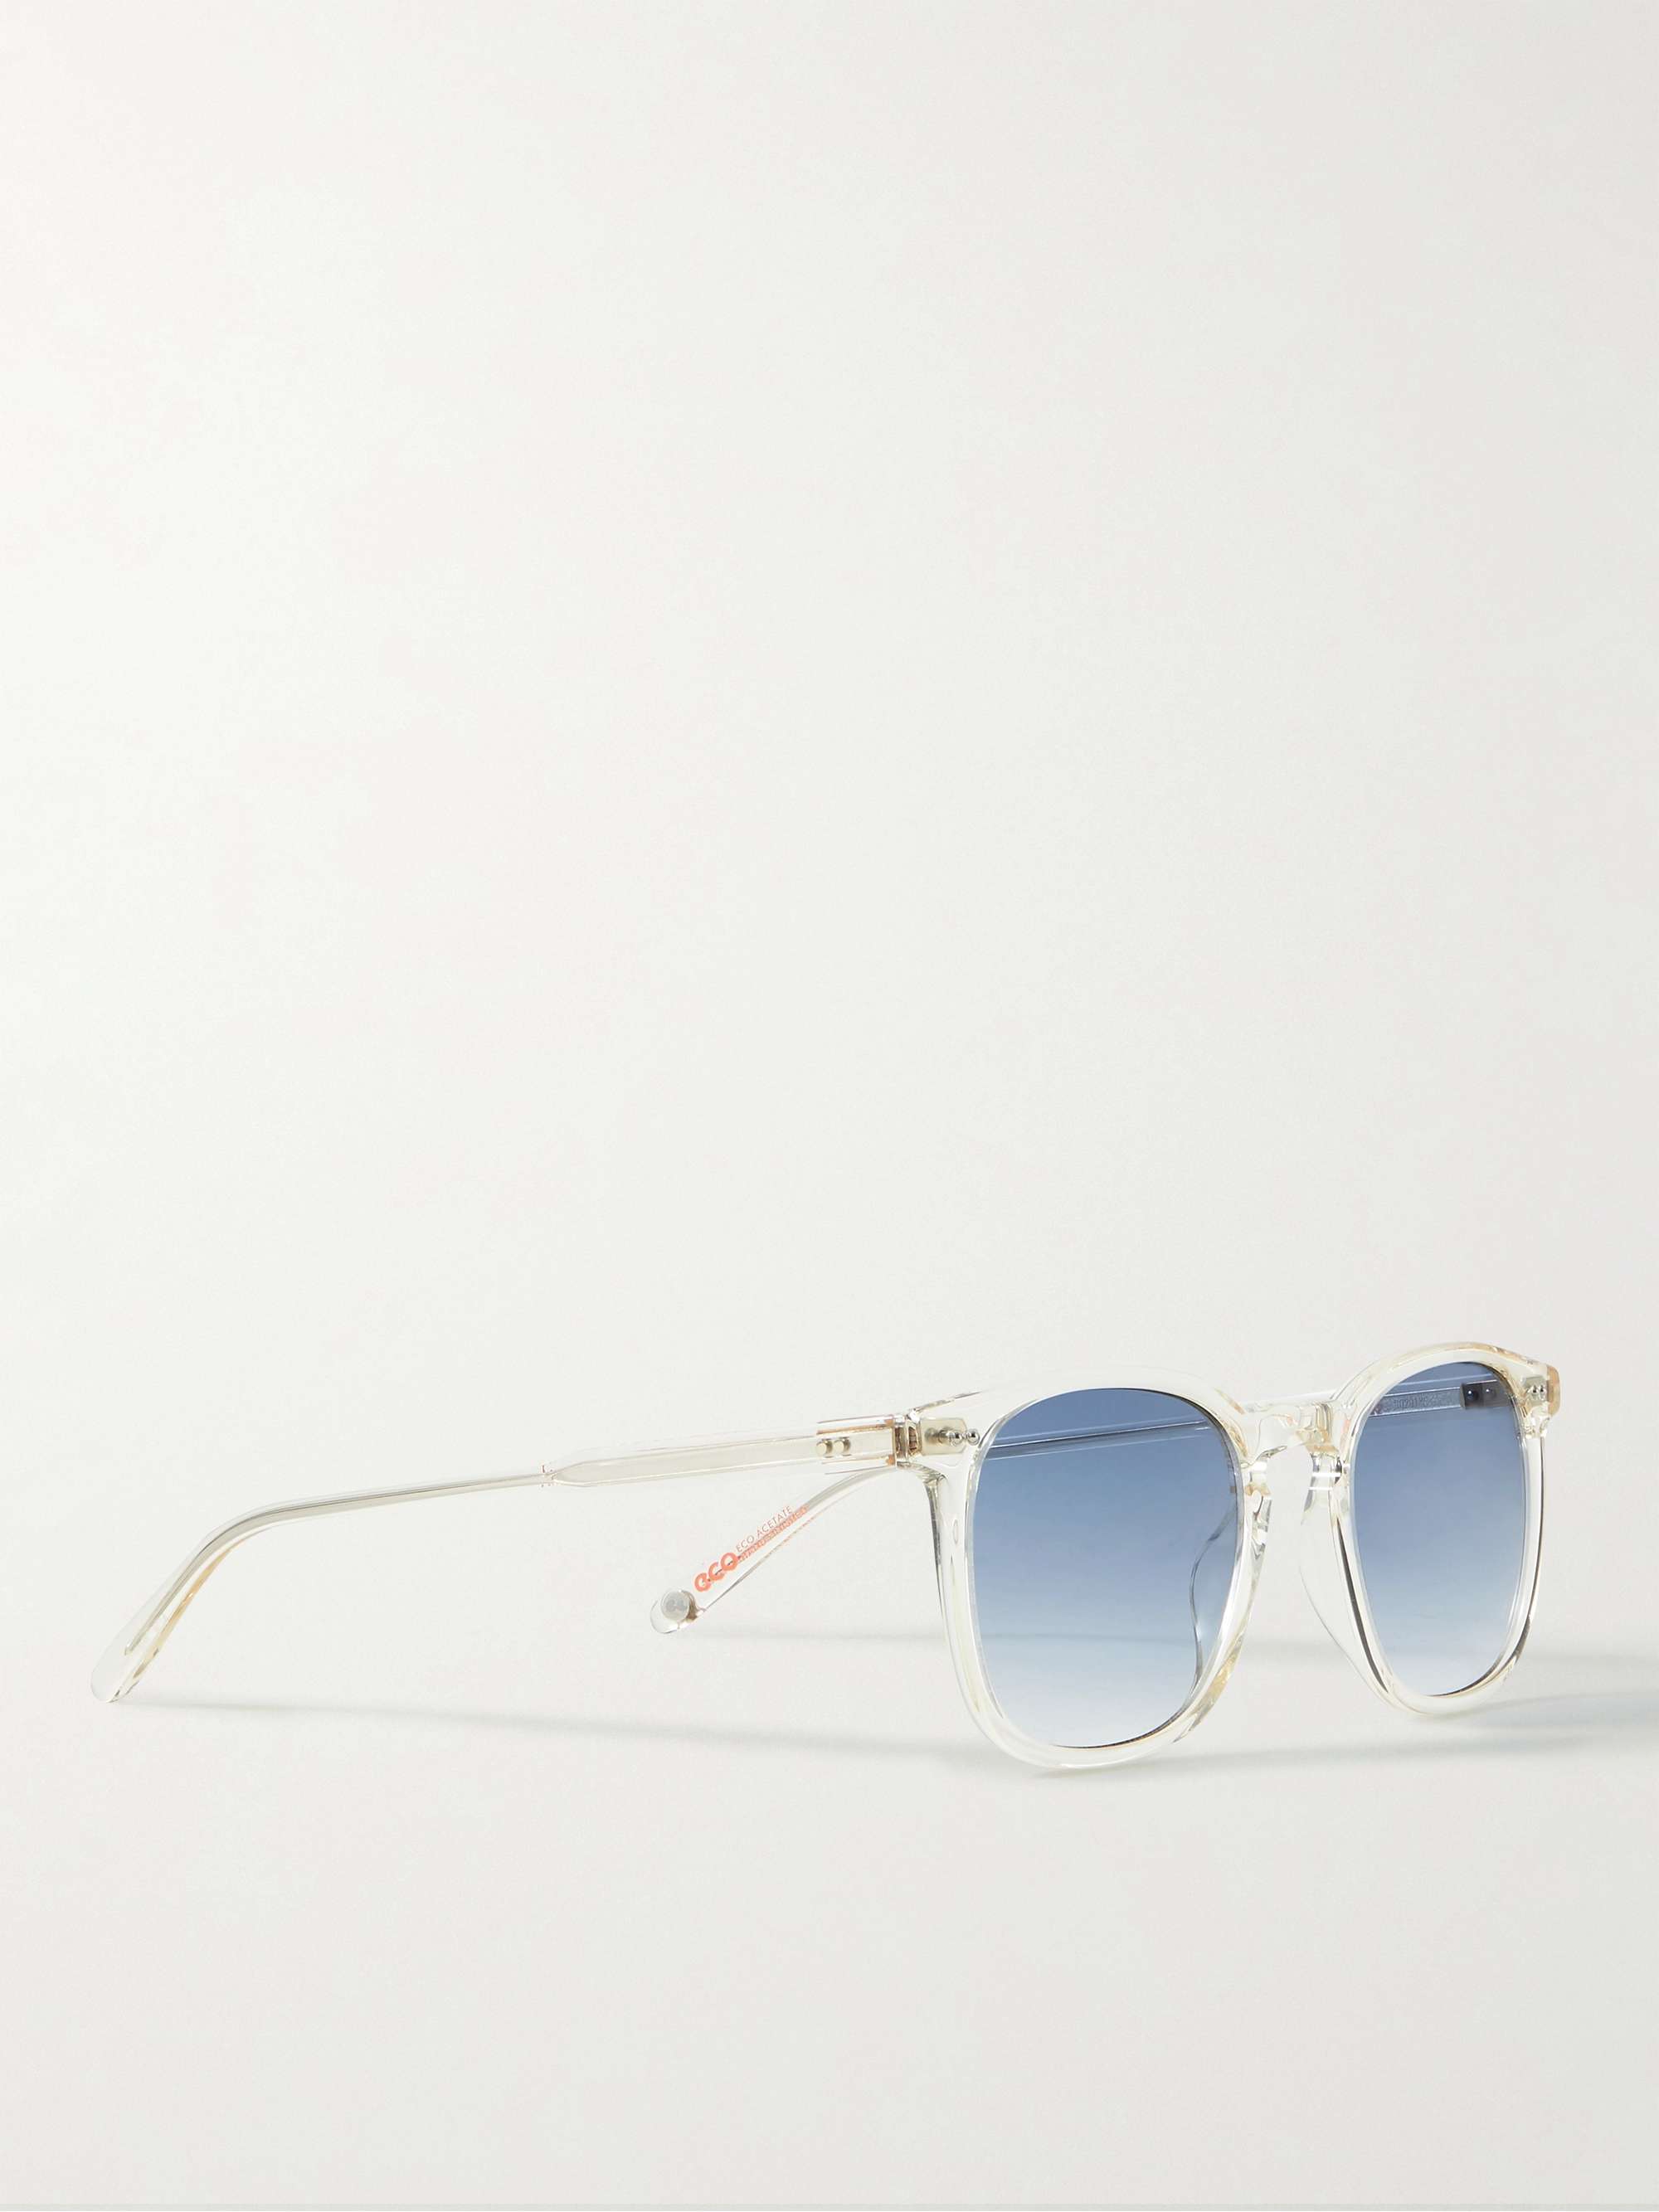 GARRETT LEIGHT CALIFORNIA OPTICAL Ruskin 48 D-Frame Acetate Sunglasses